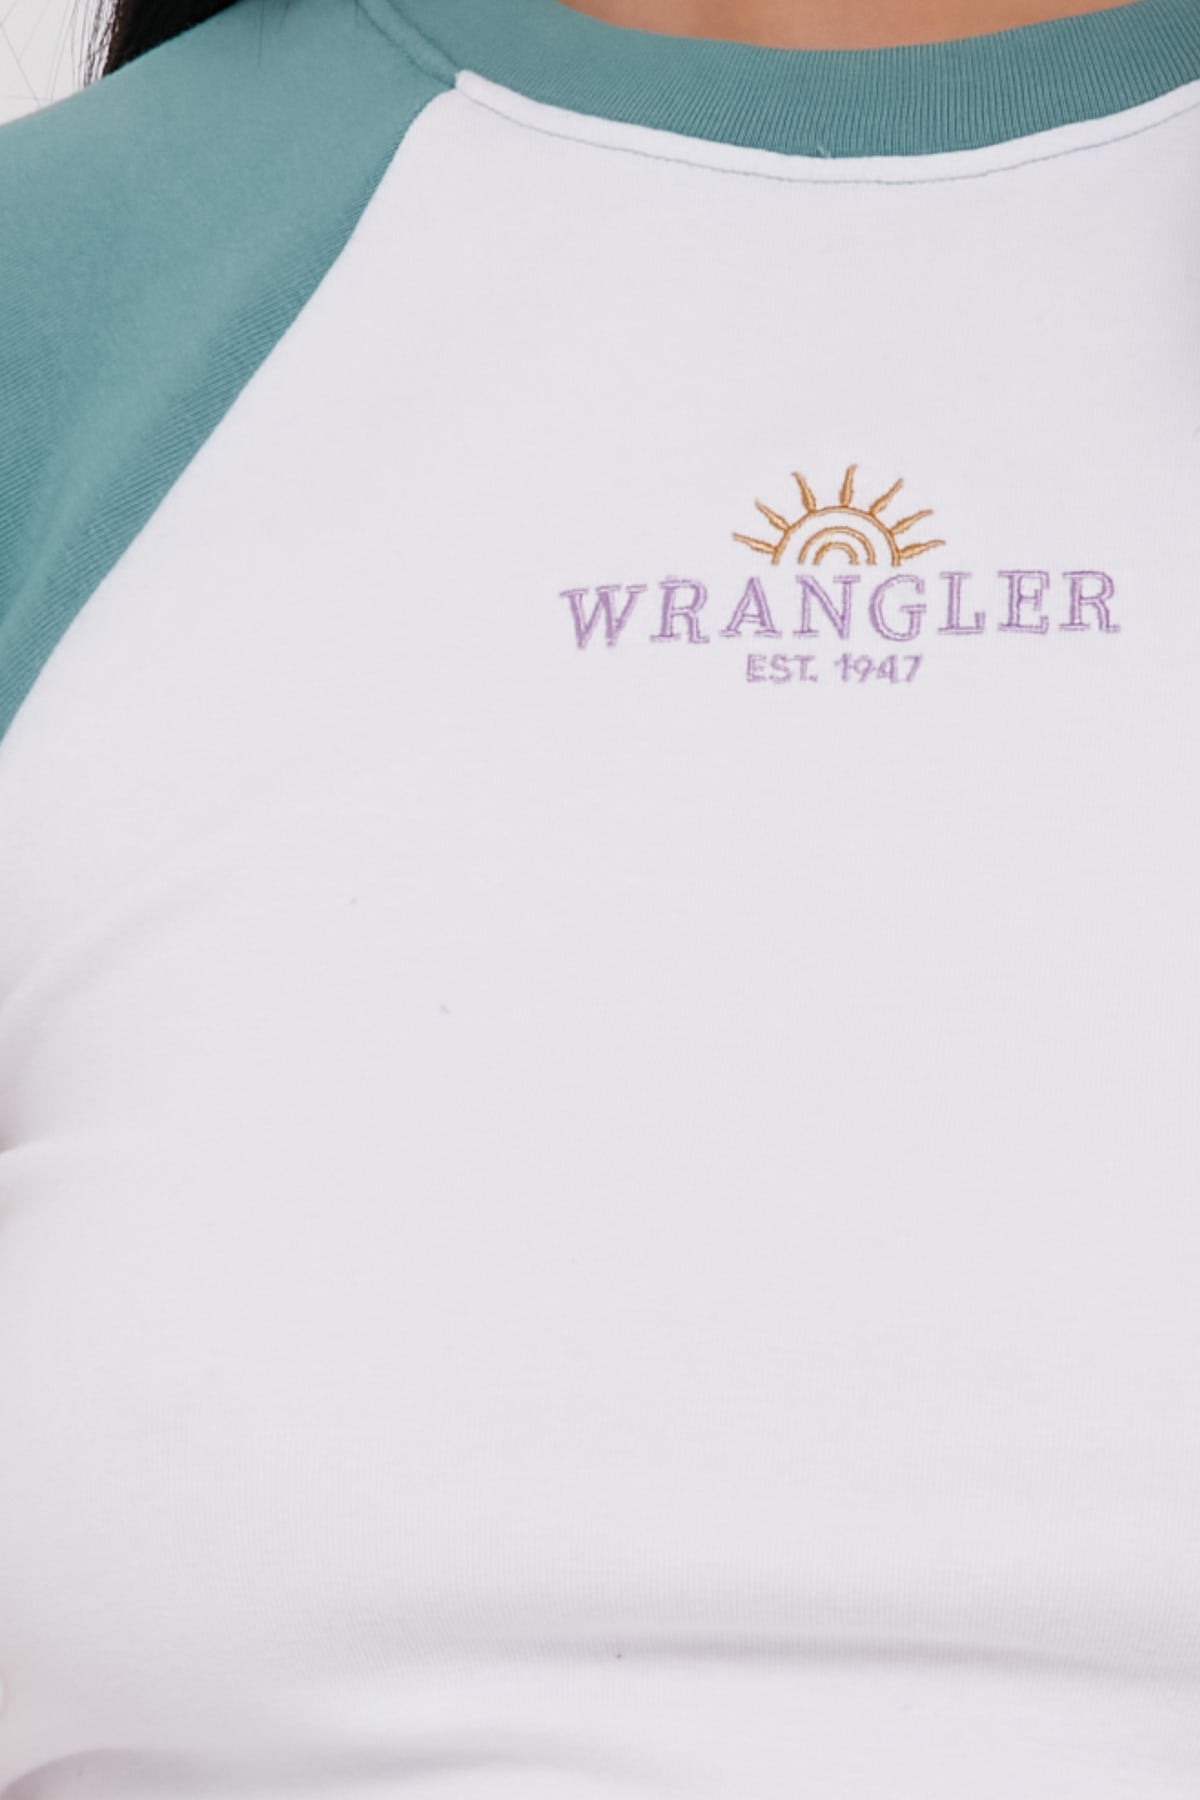 Wrangler BABY RAGLAN TEE WHITE/TEAL